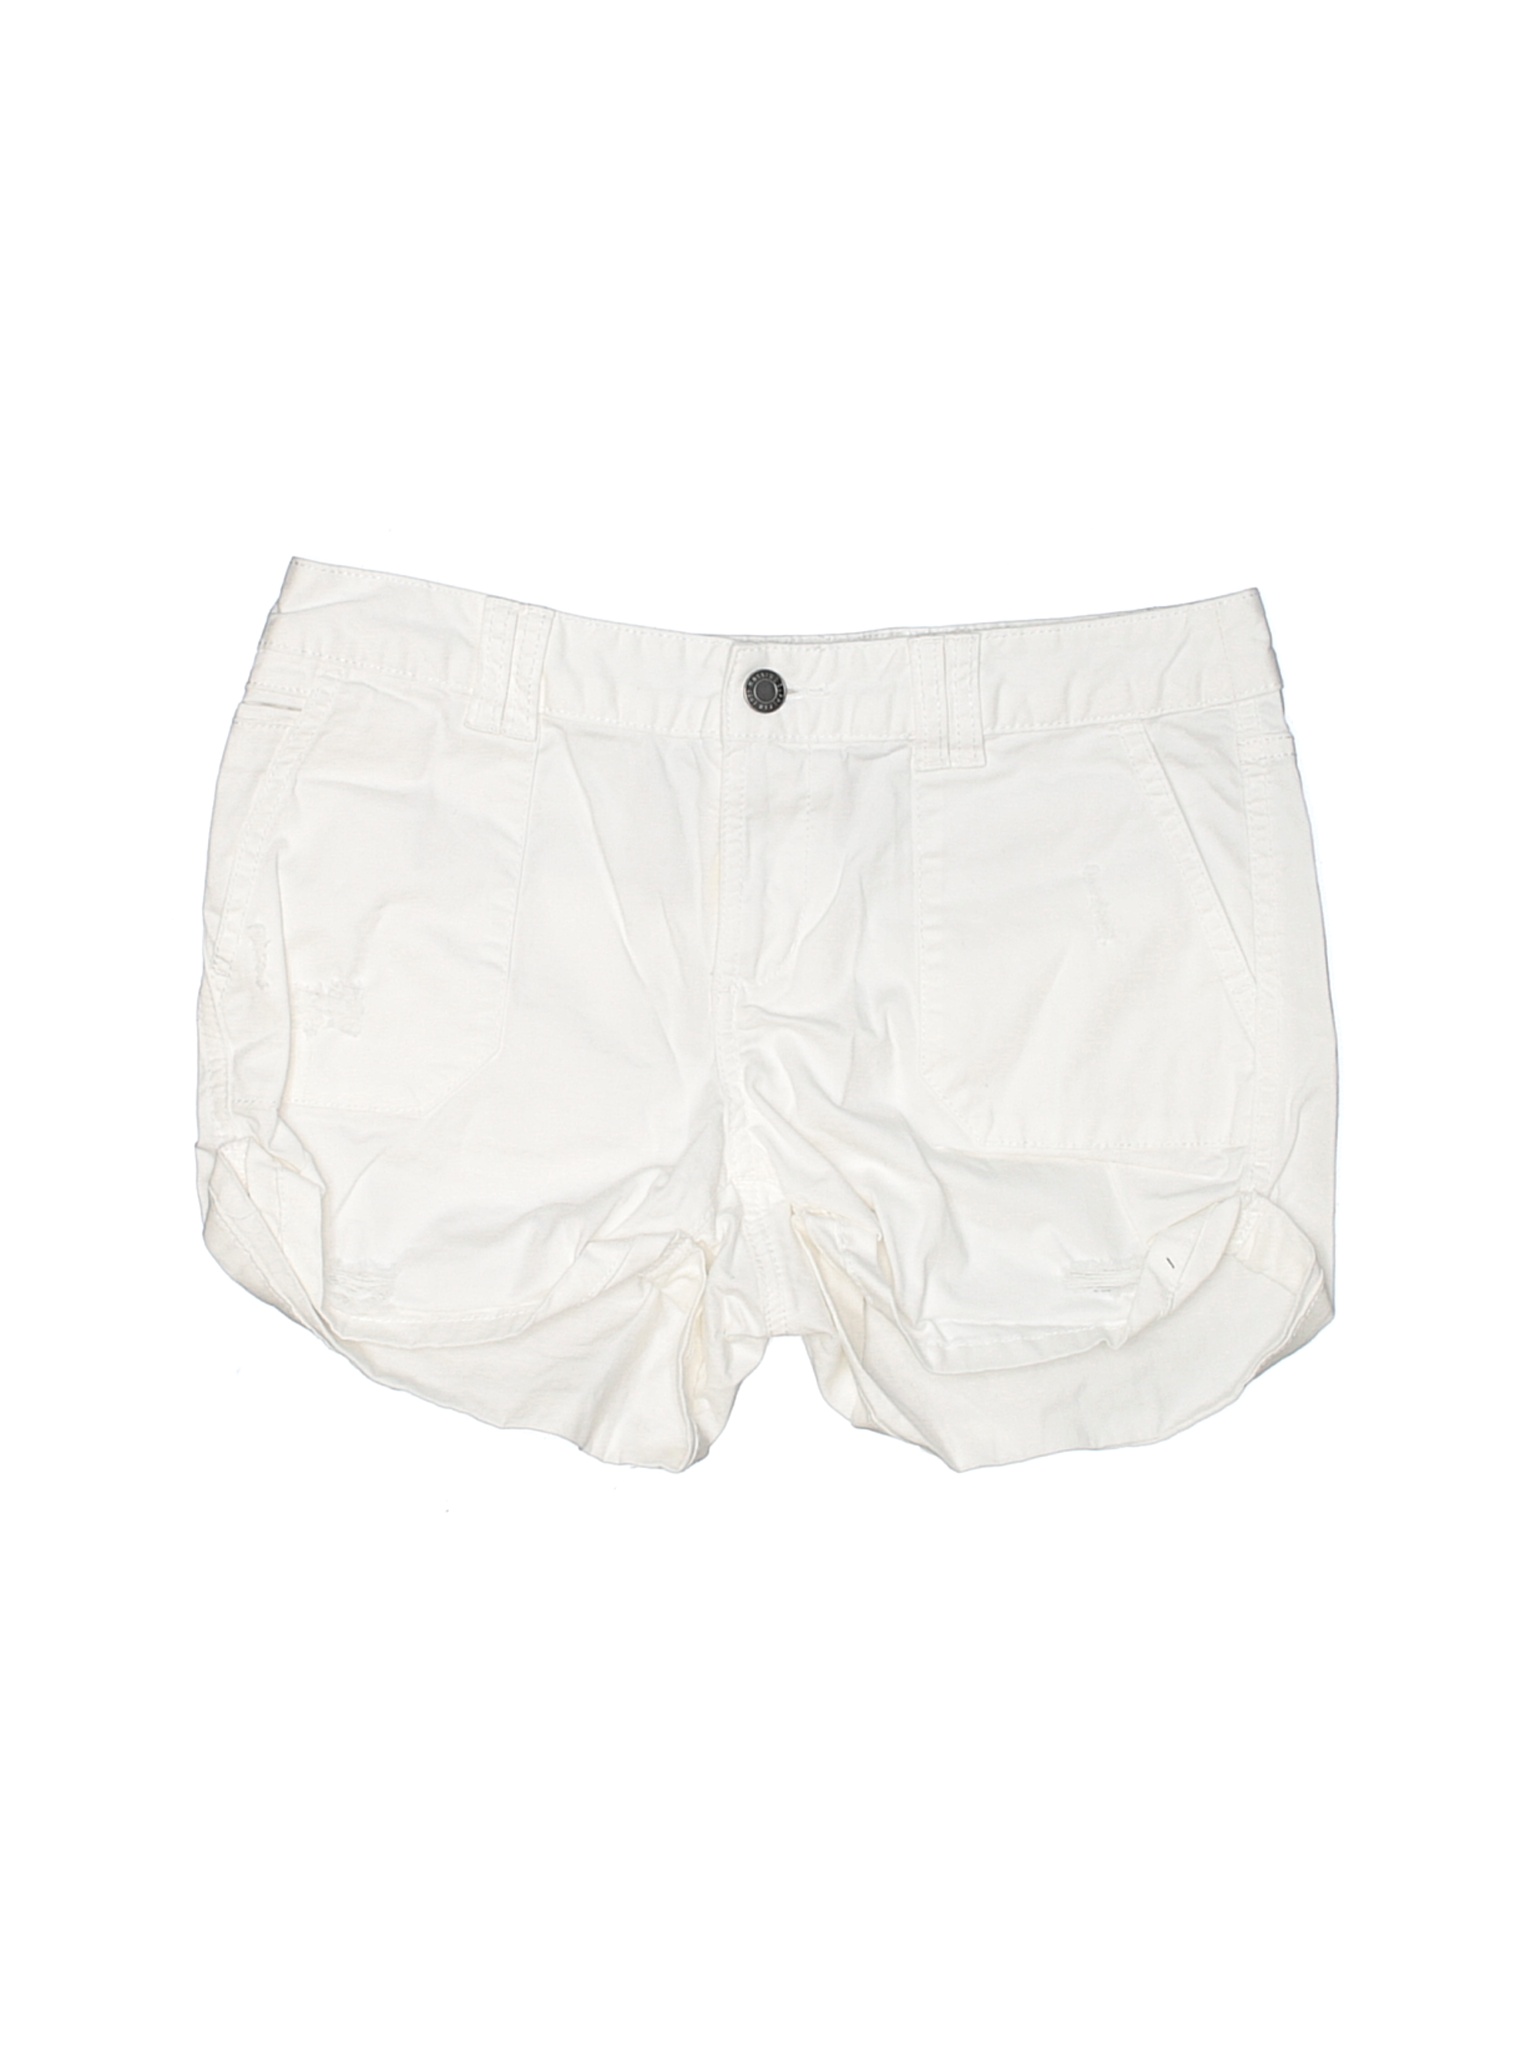 Mossimo Supply Co. Women White Denim Shorts 2 | eBay